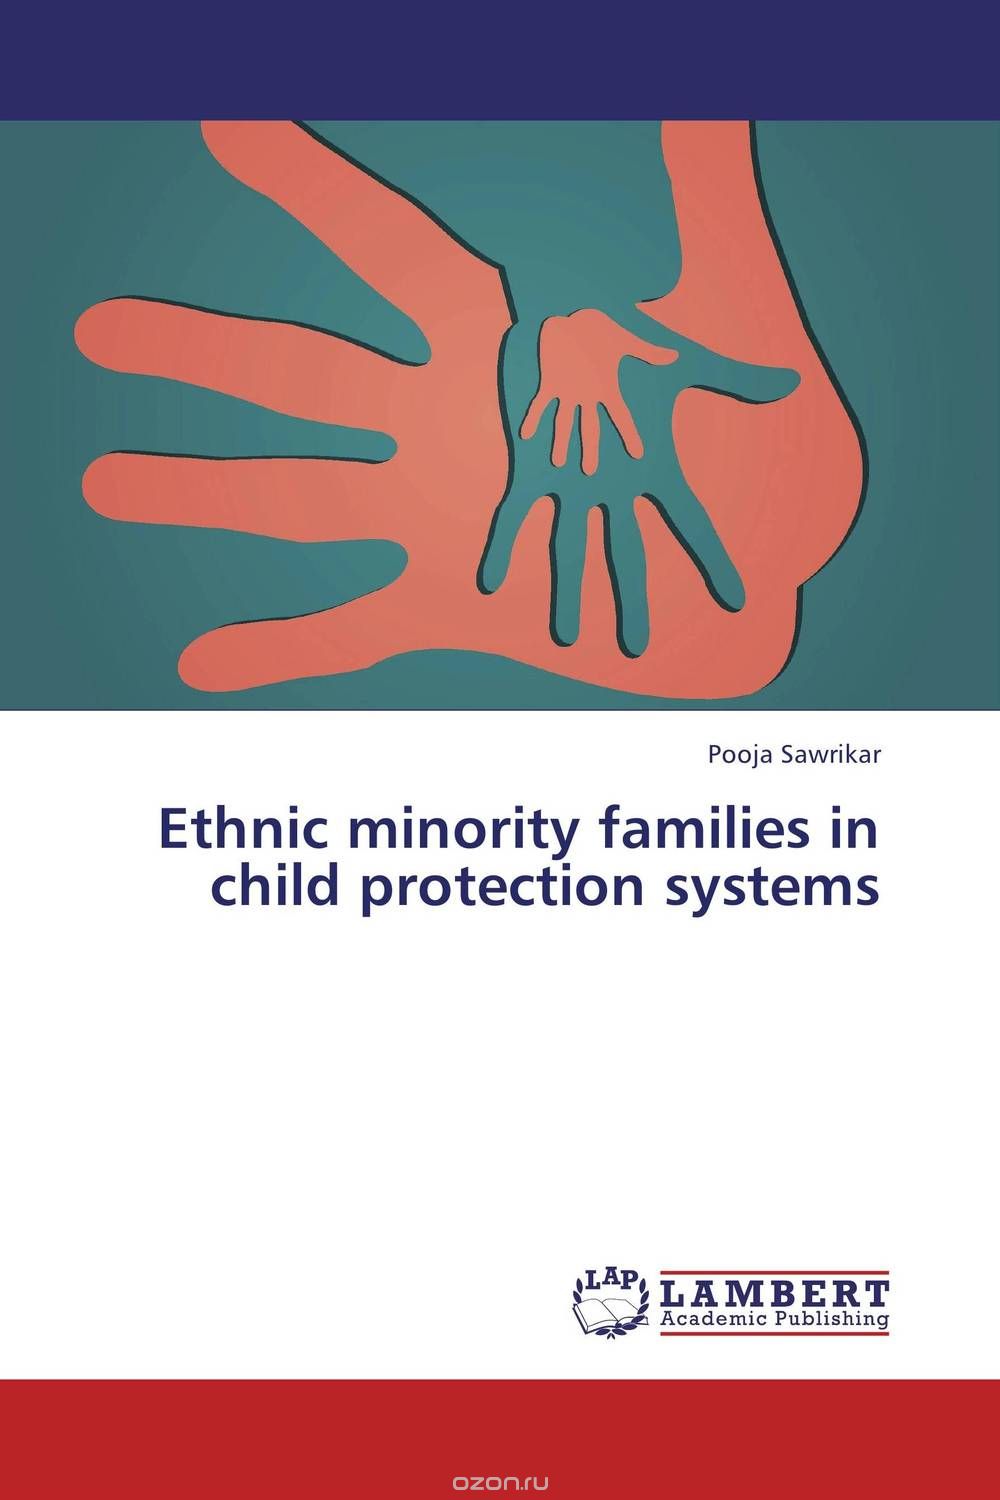 Скачать книгу "Ethnic minority families in child protection systems"